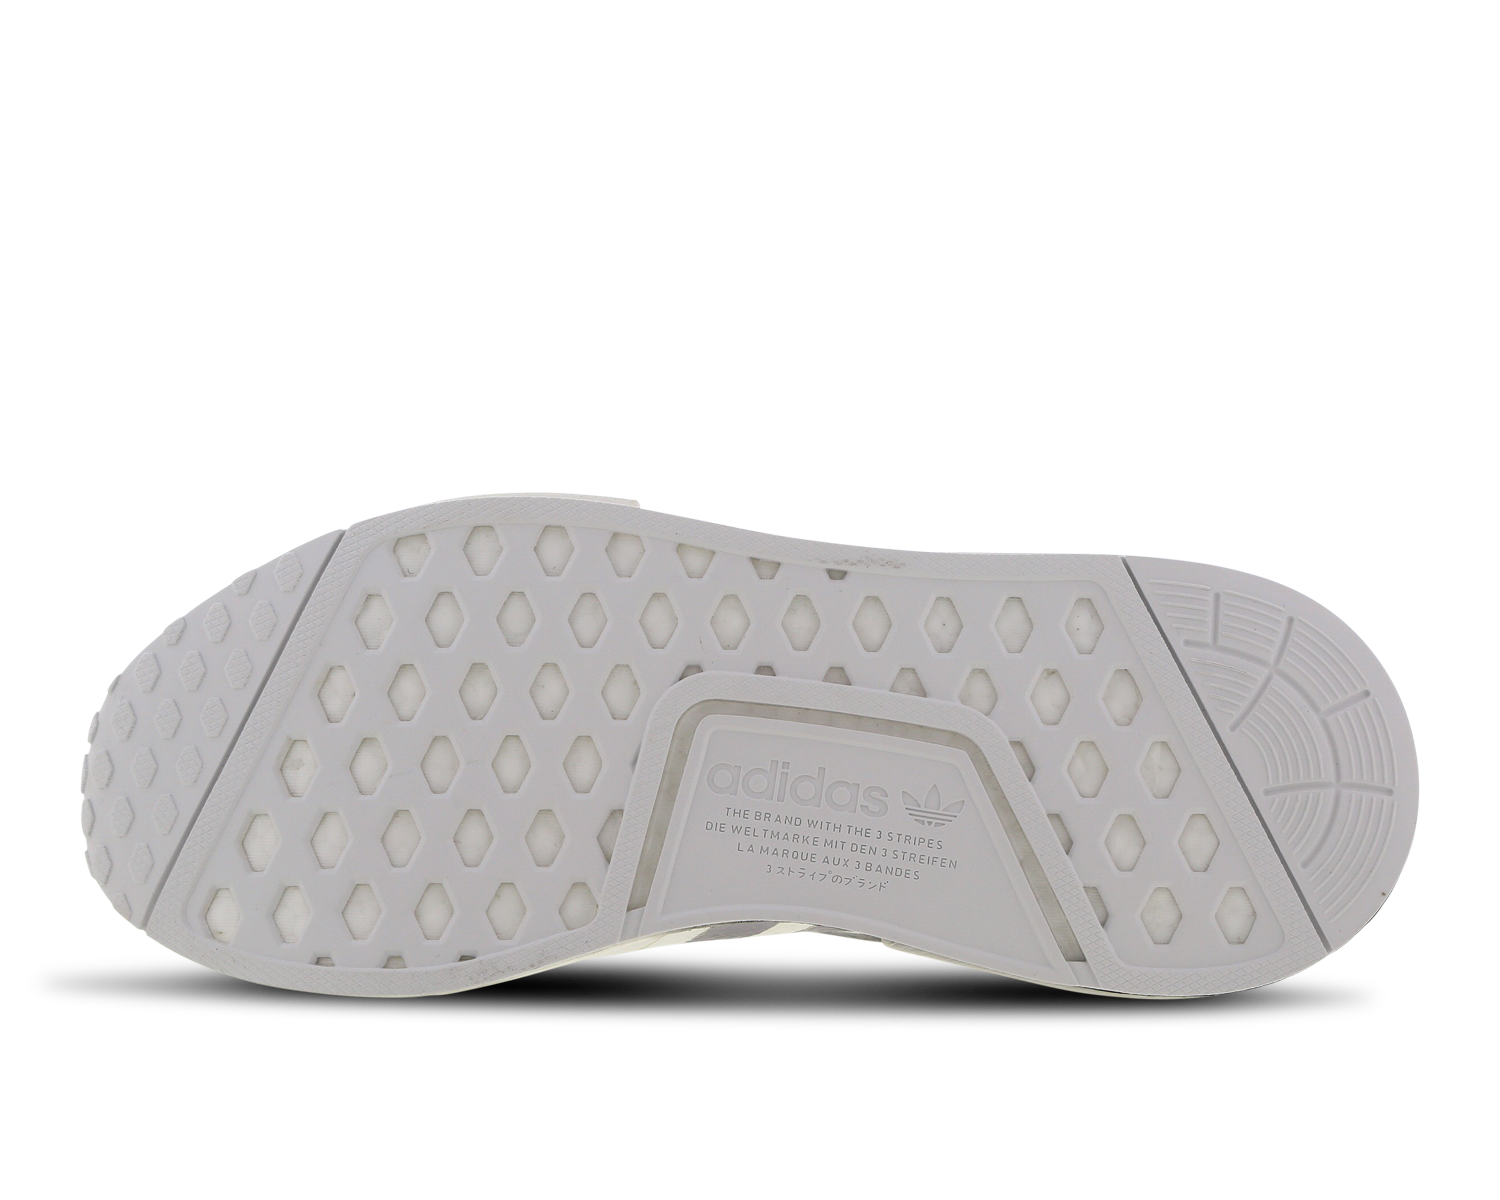 Pitch Black adidas NMD R1 Primeknit SneakerFiles